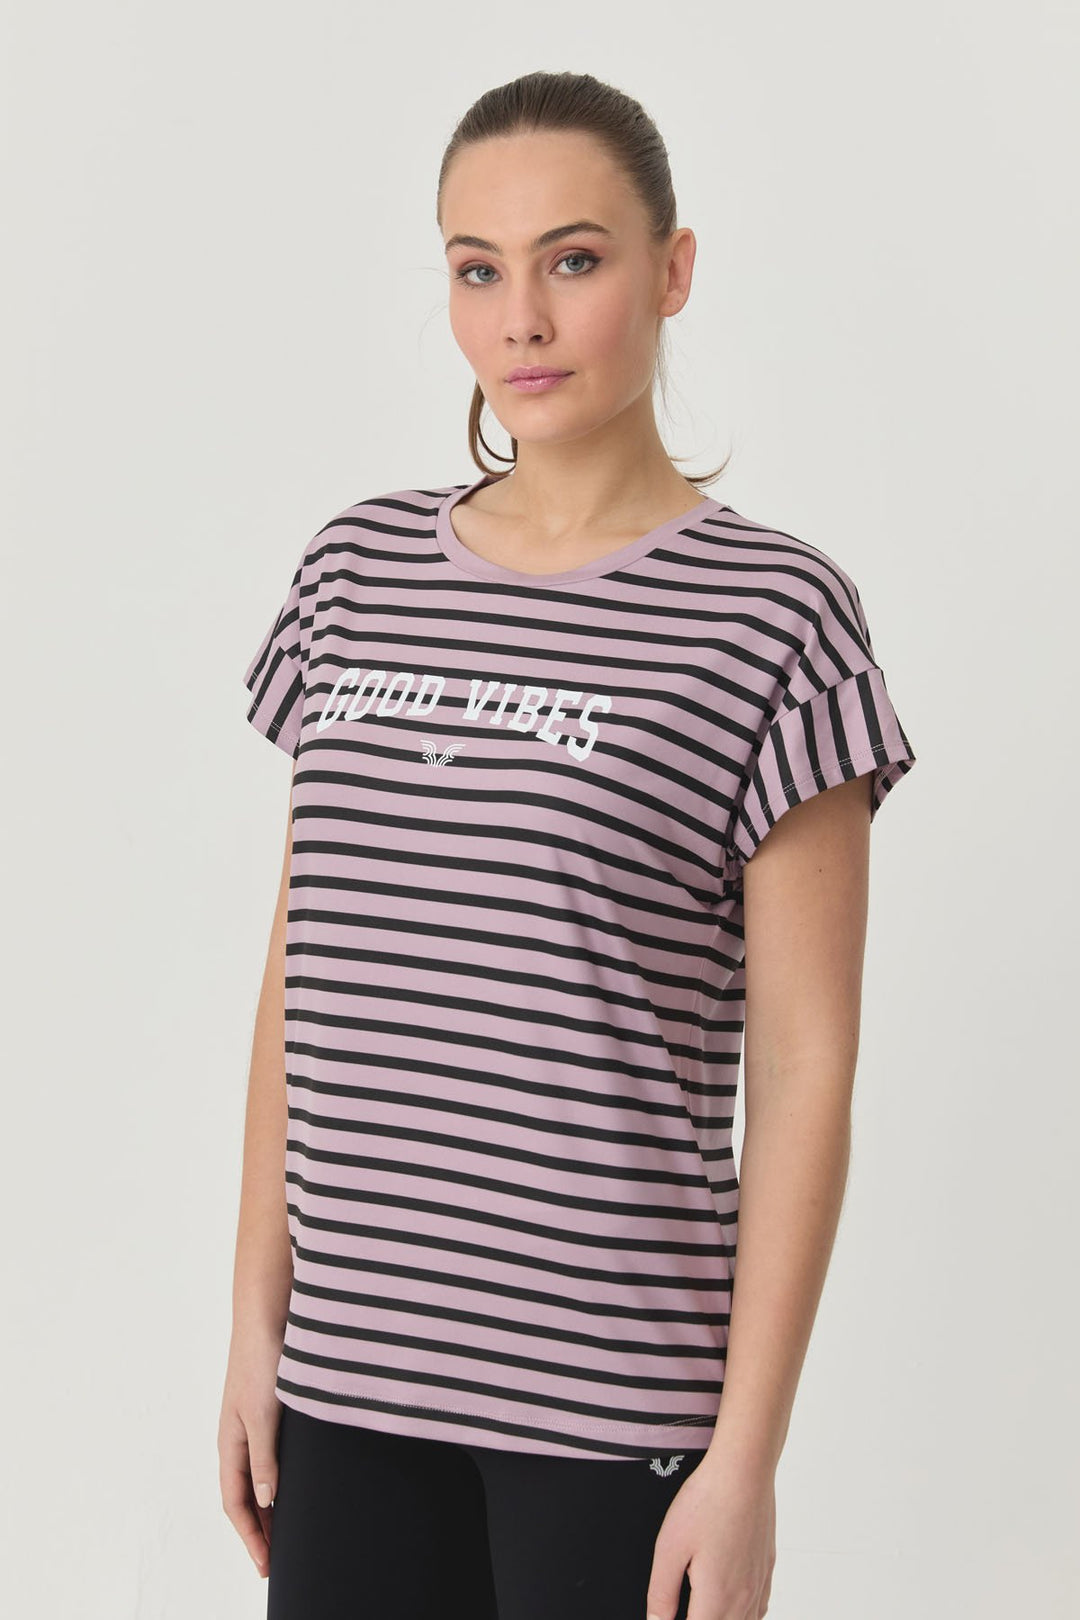 Digital Bedrucktes T-Shirt für Damen